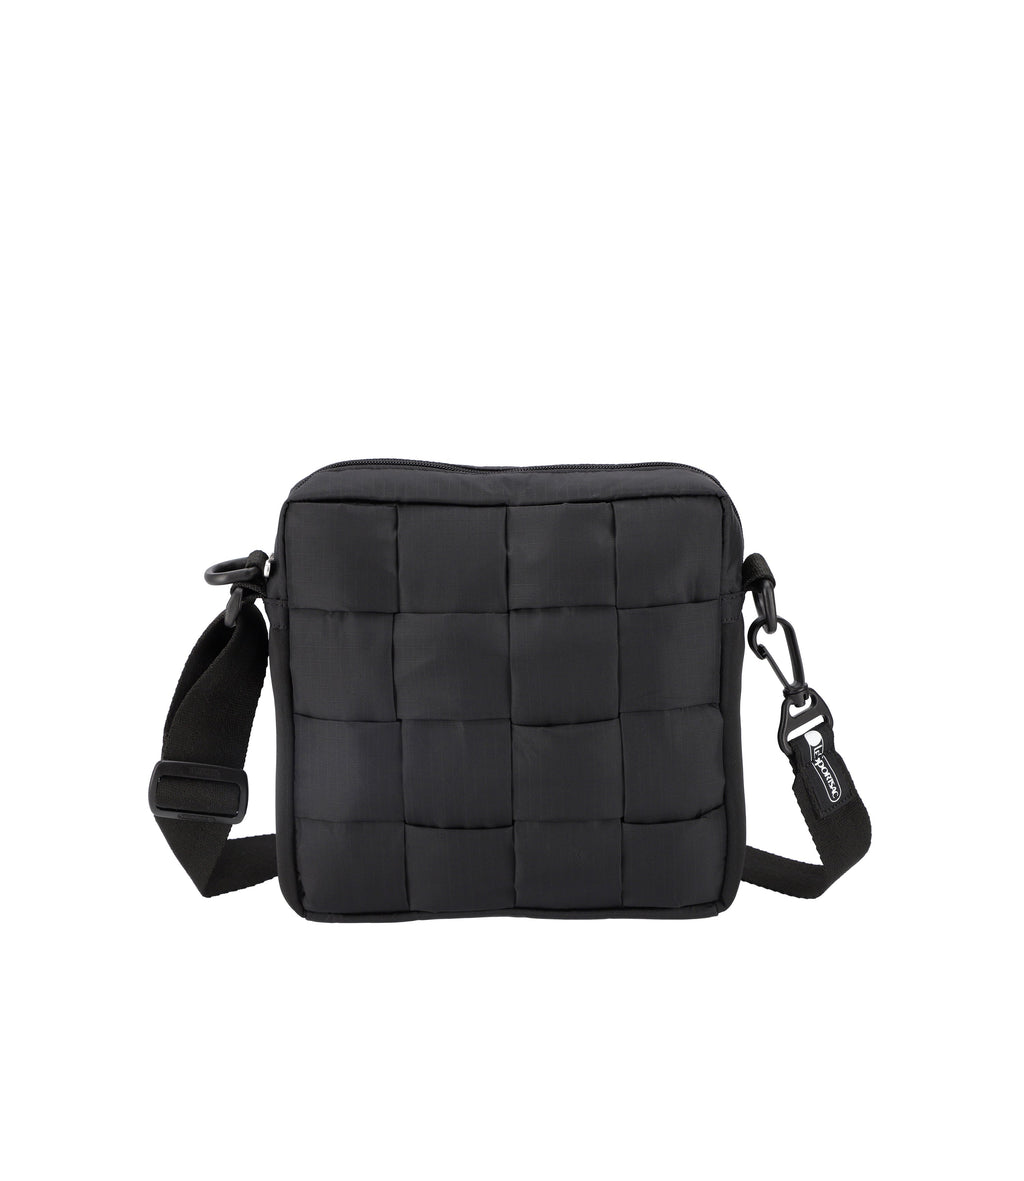 1 Leather Adjustable Convertible Slide Cross body Bag Purse Strap